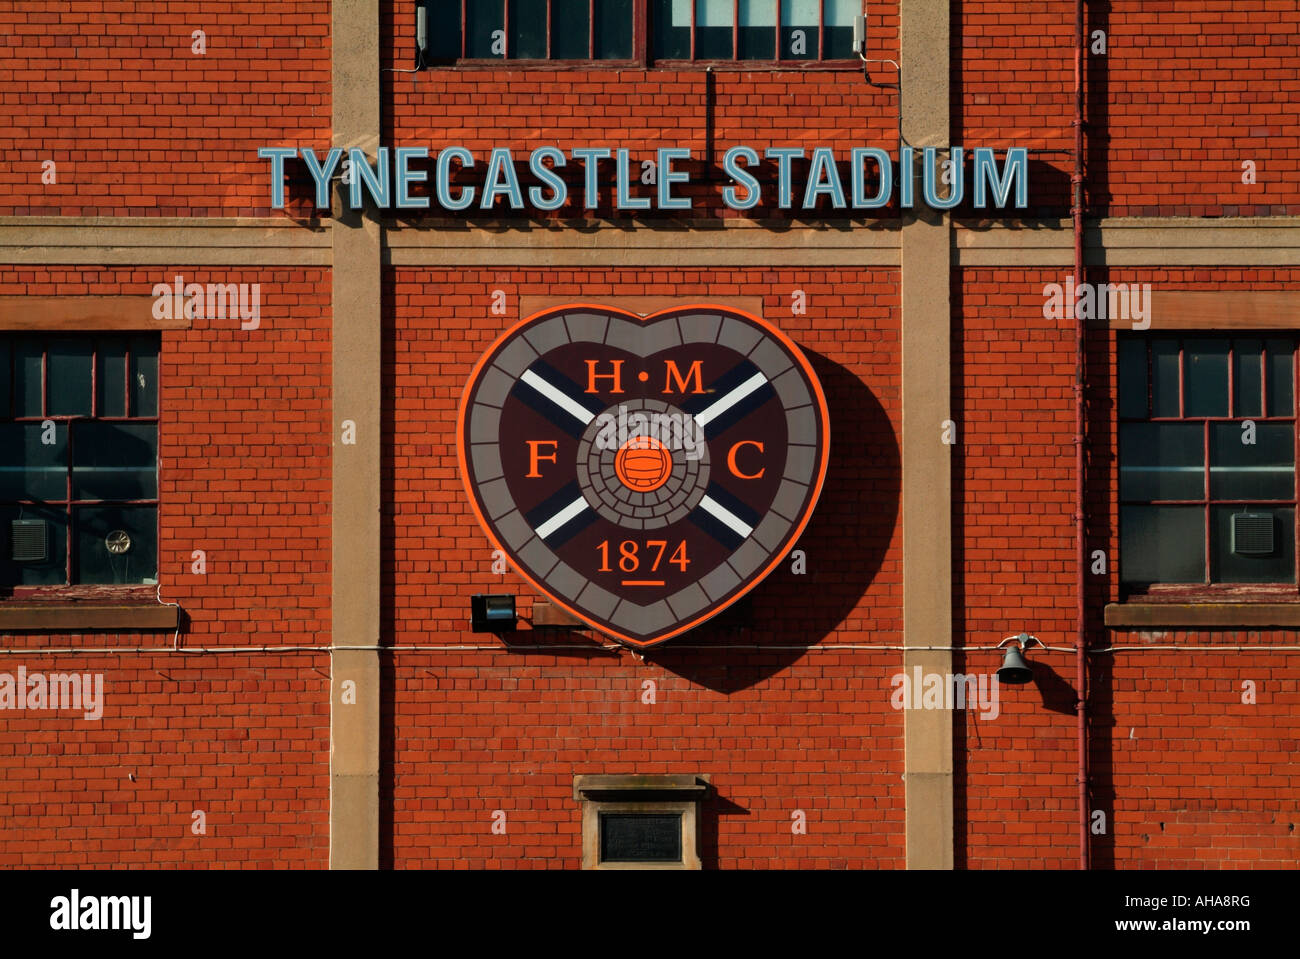 Tynecastle Stadium home of Heart of Midlothian Football Club Stock Photo